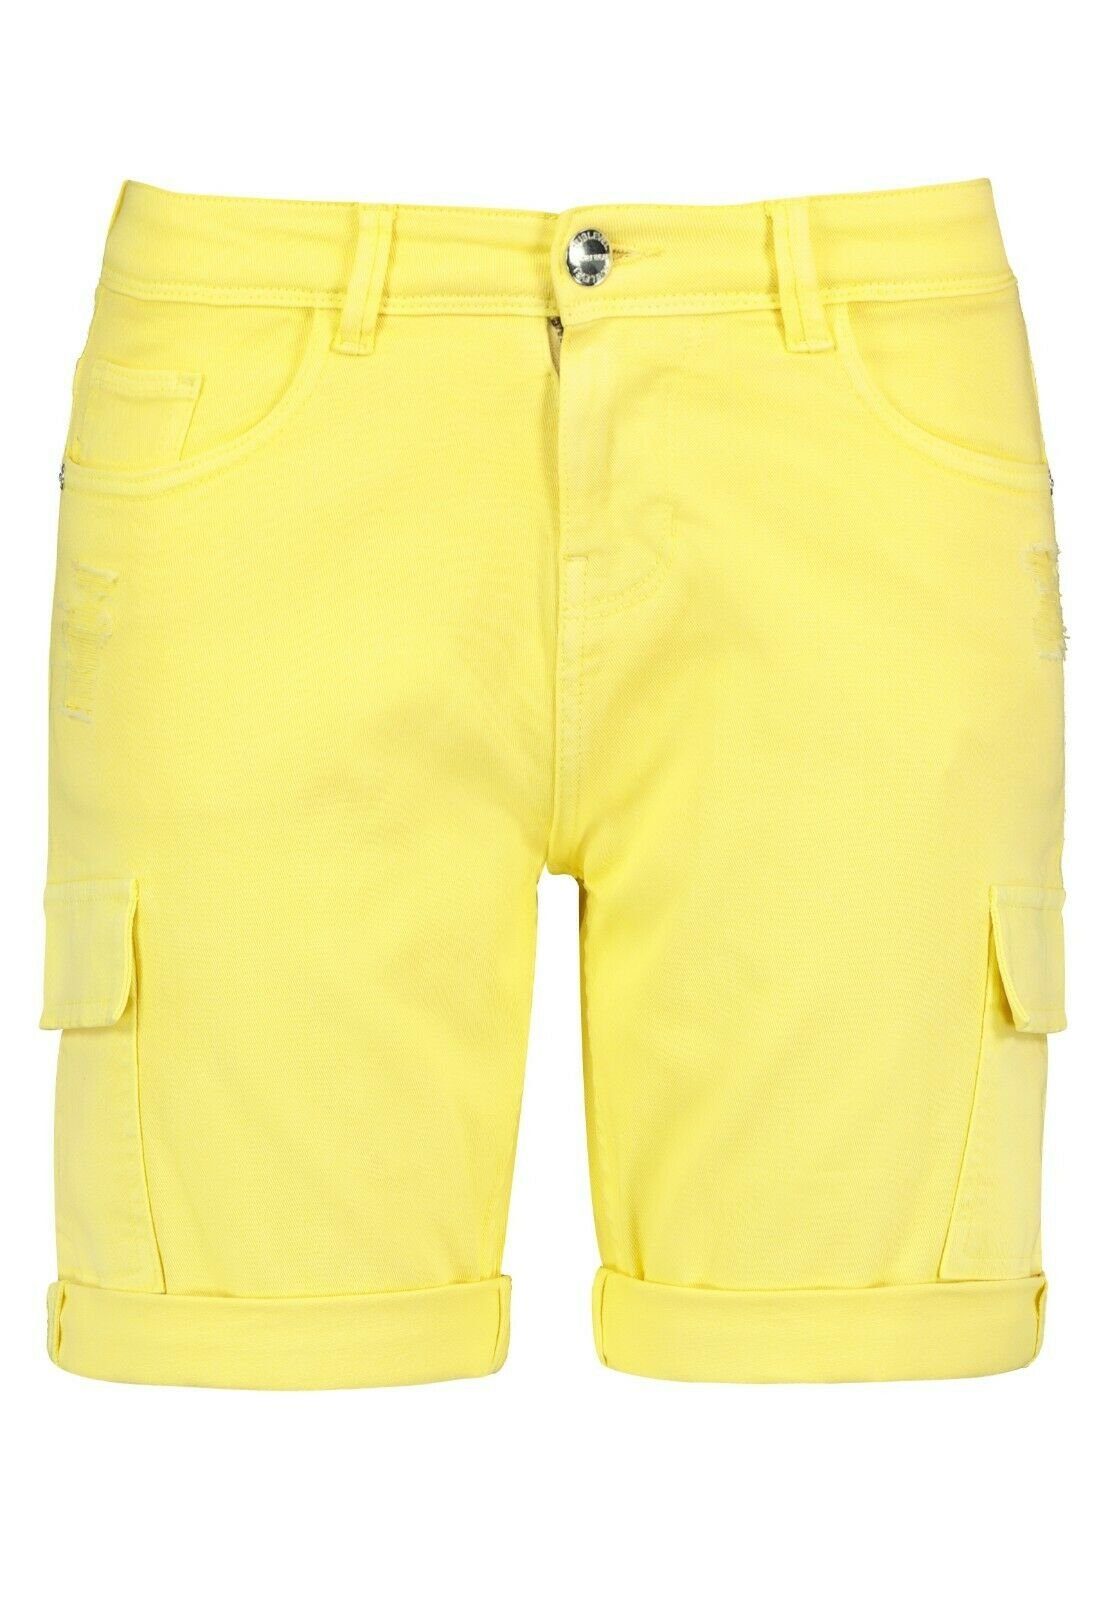 Bermuda Shorts Kurze citrus Shorts Bermudas Cargo Damen SUBLEVEL Denim Denim yellow Short Stretch Hose